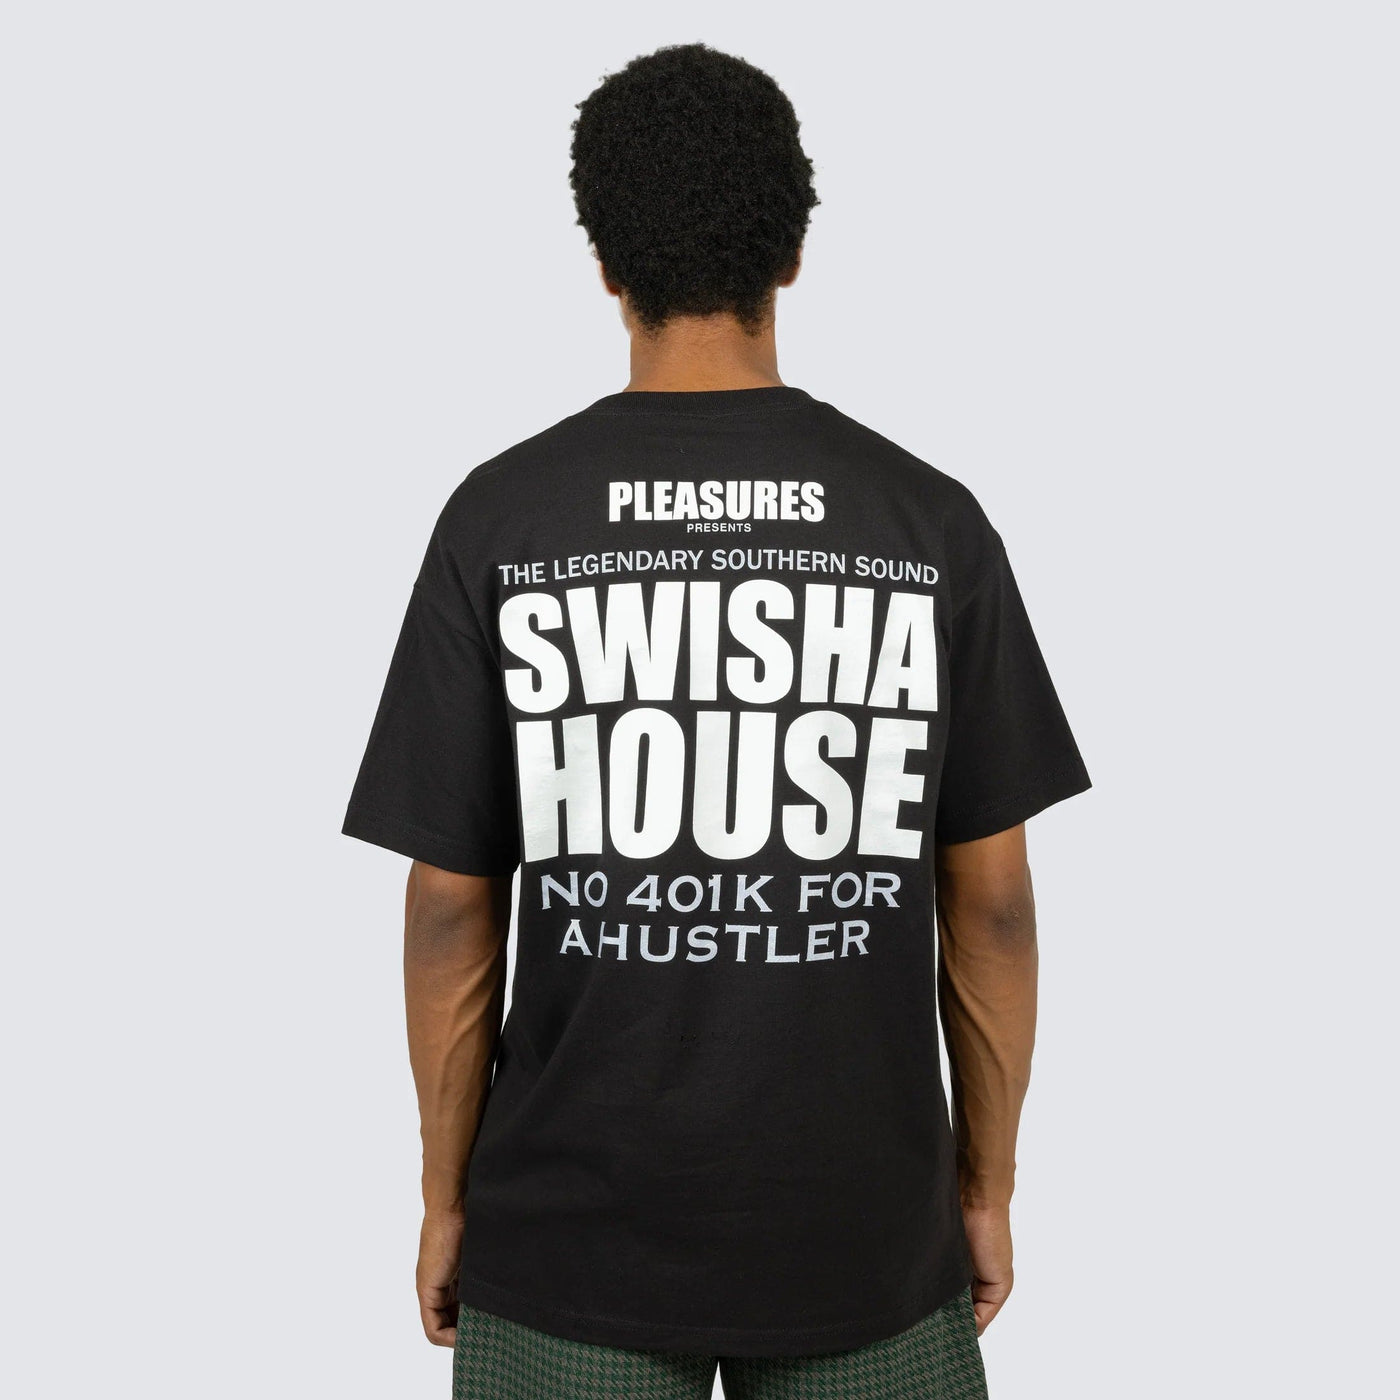 Pleasures Chain T-shirt